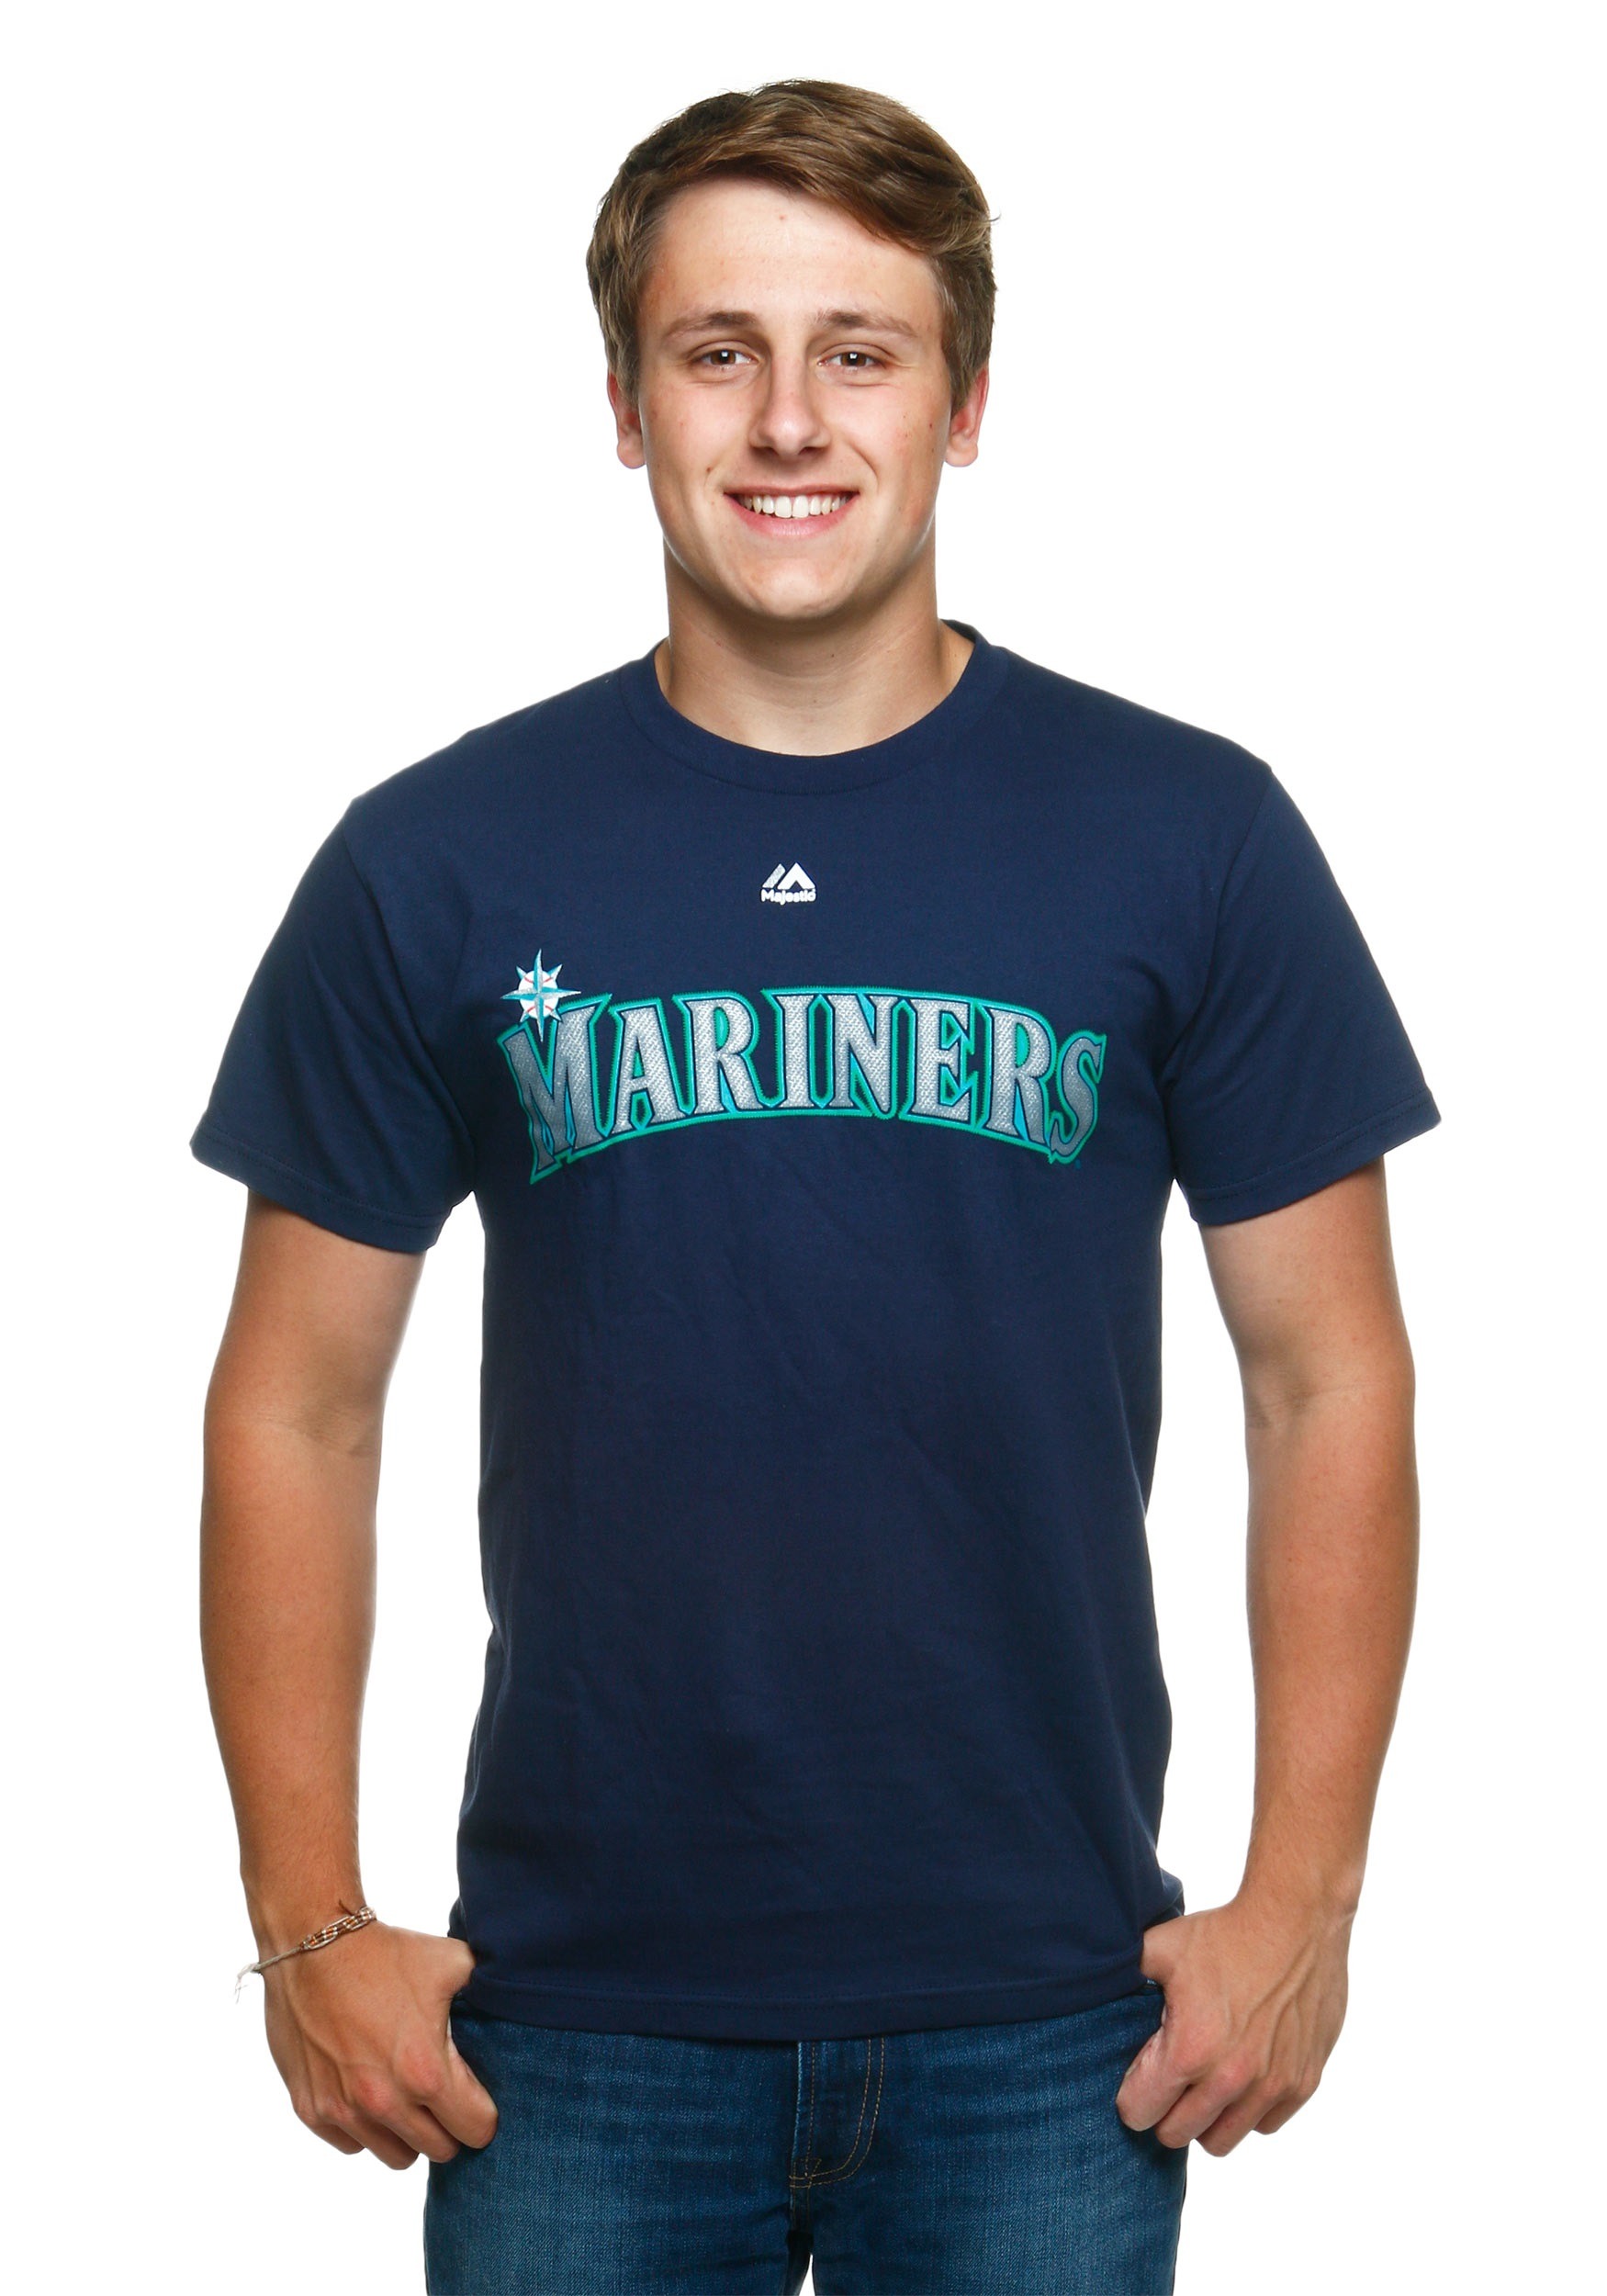 mariners tee shirts